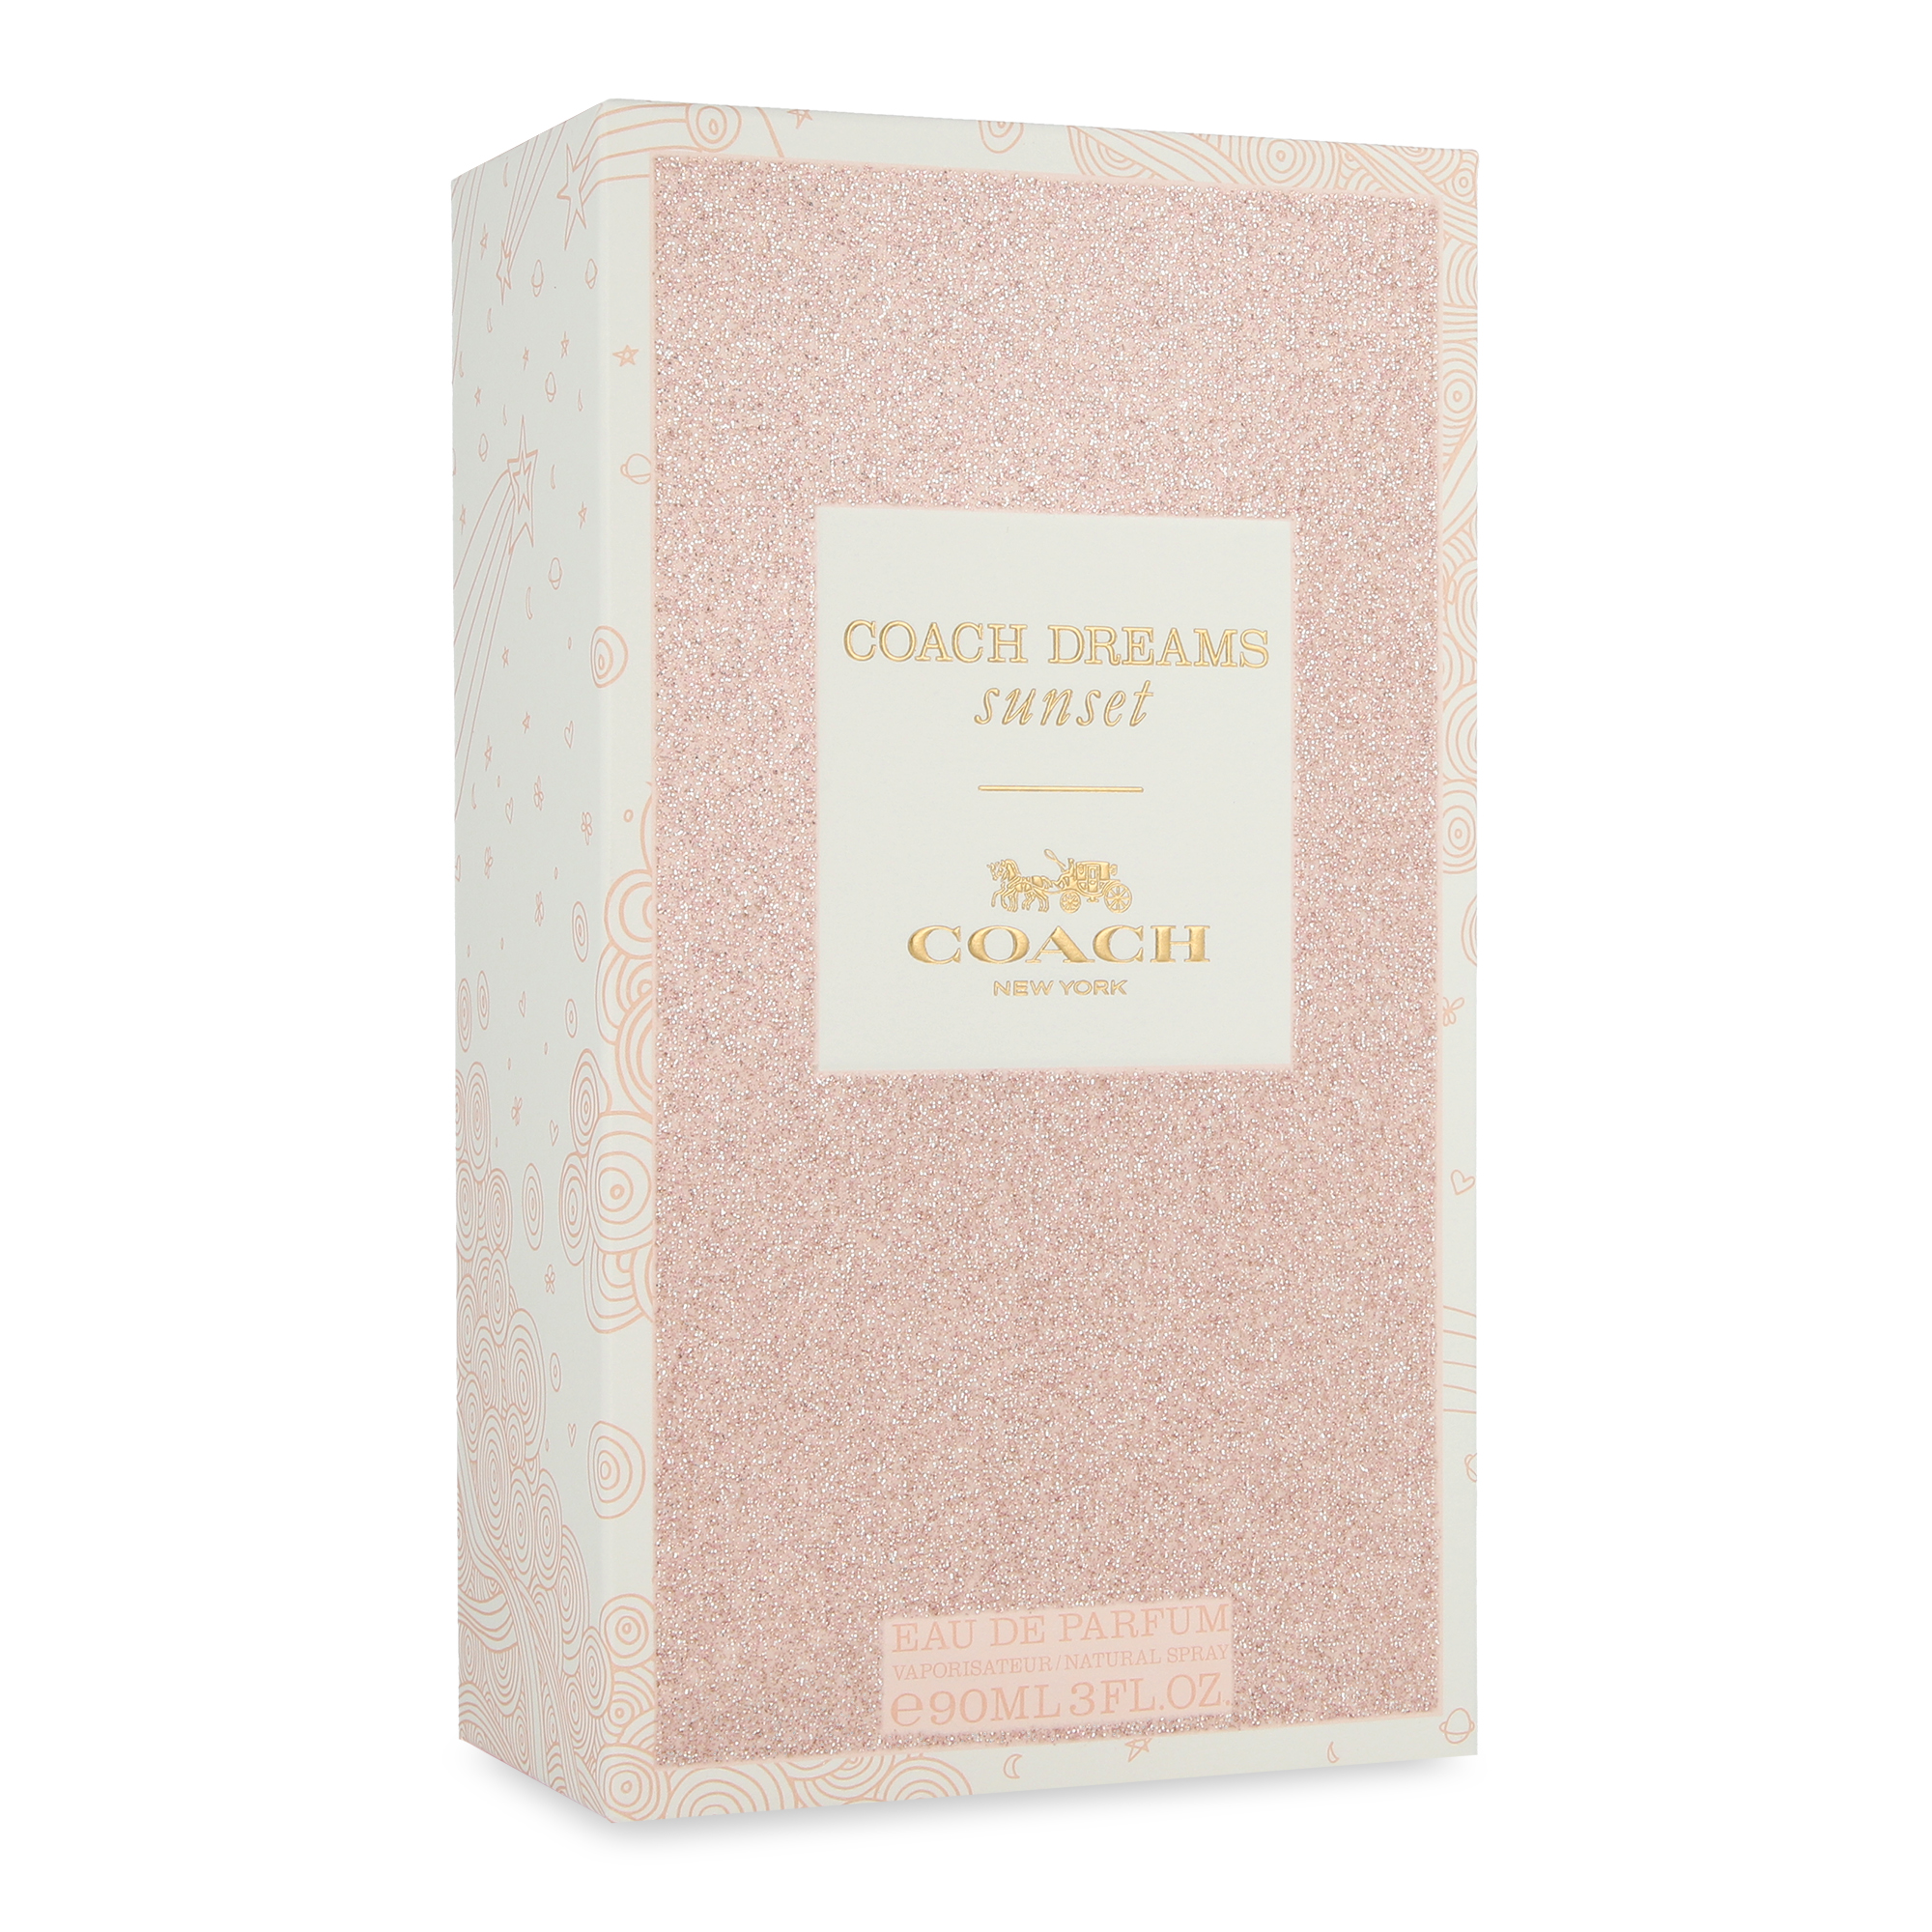 Perfume Dama Coach Coach Dreams Sunset 90 ml Edp